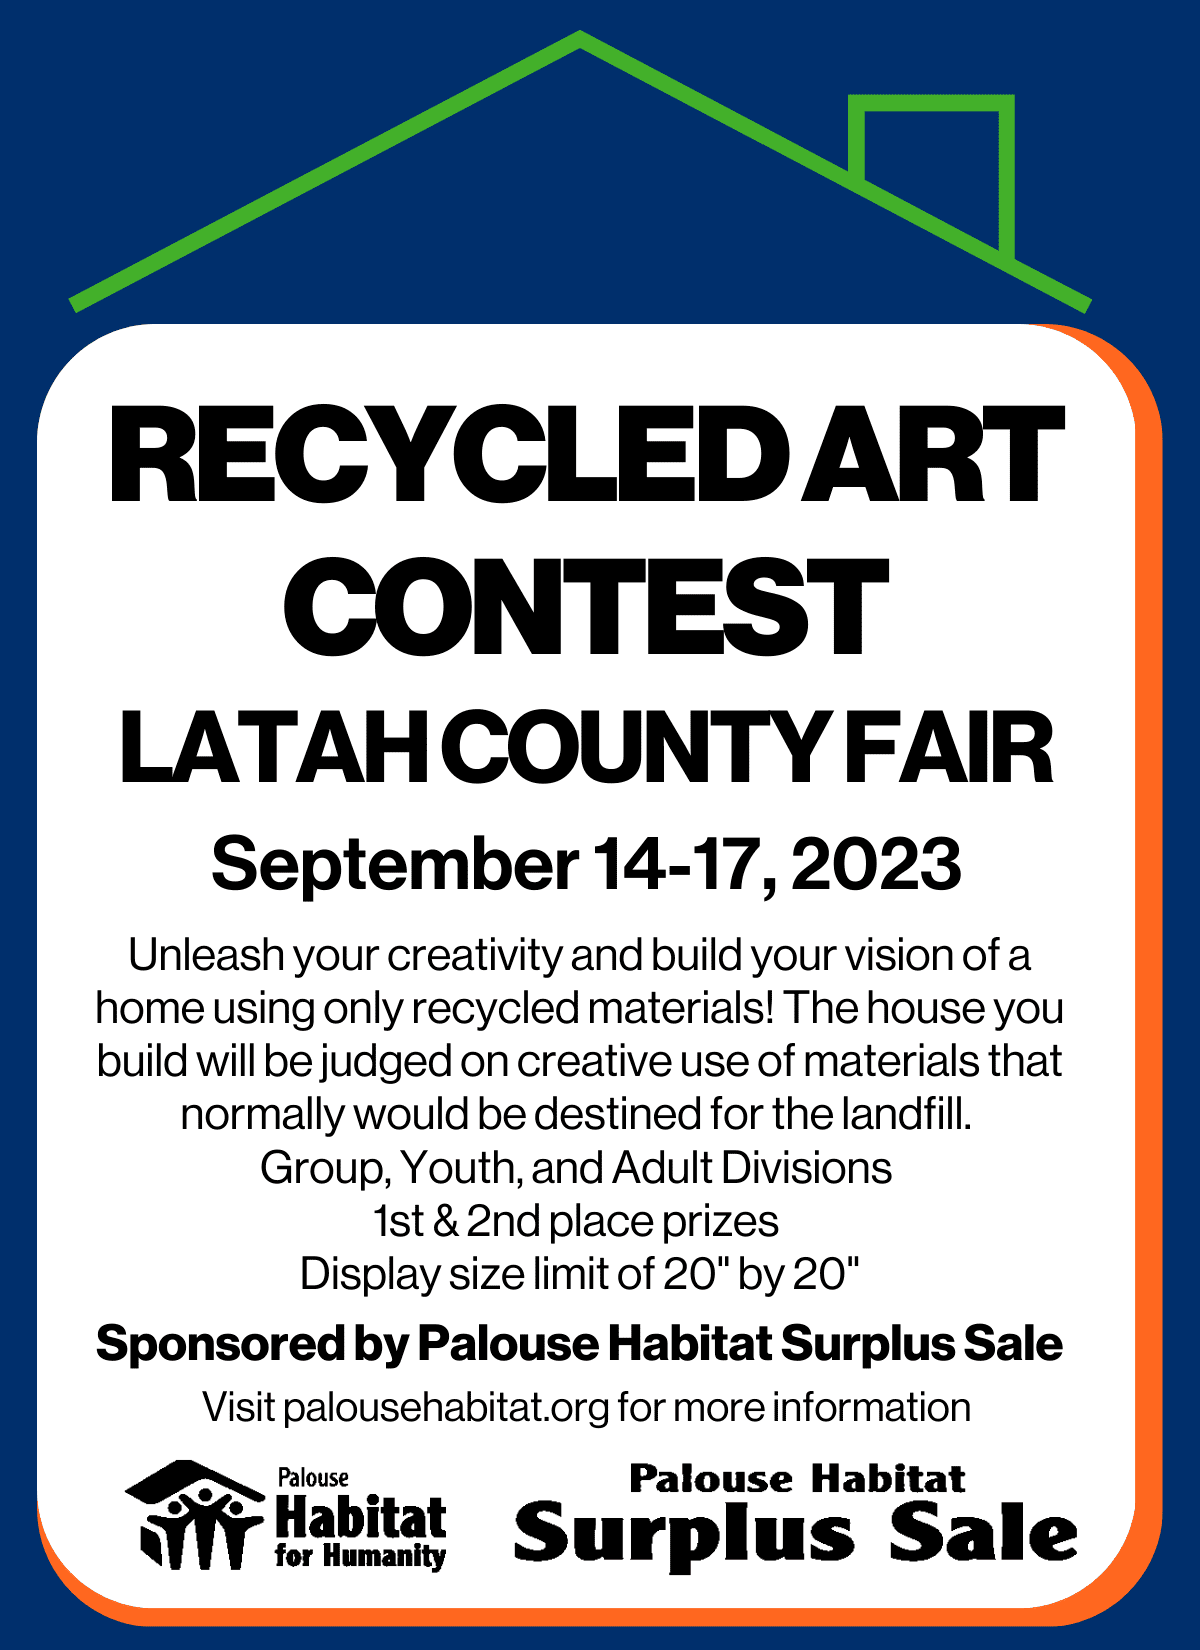 Latah County Fair Palouse Habitat for Humanity